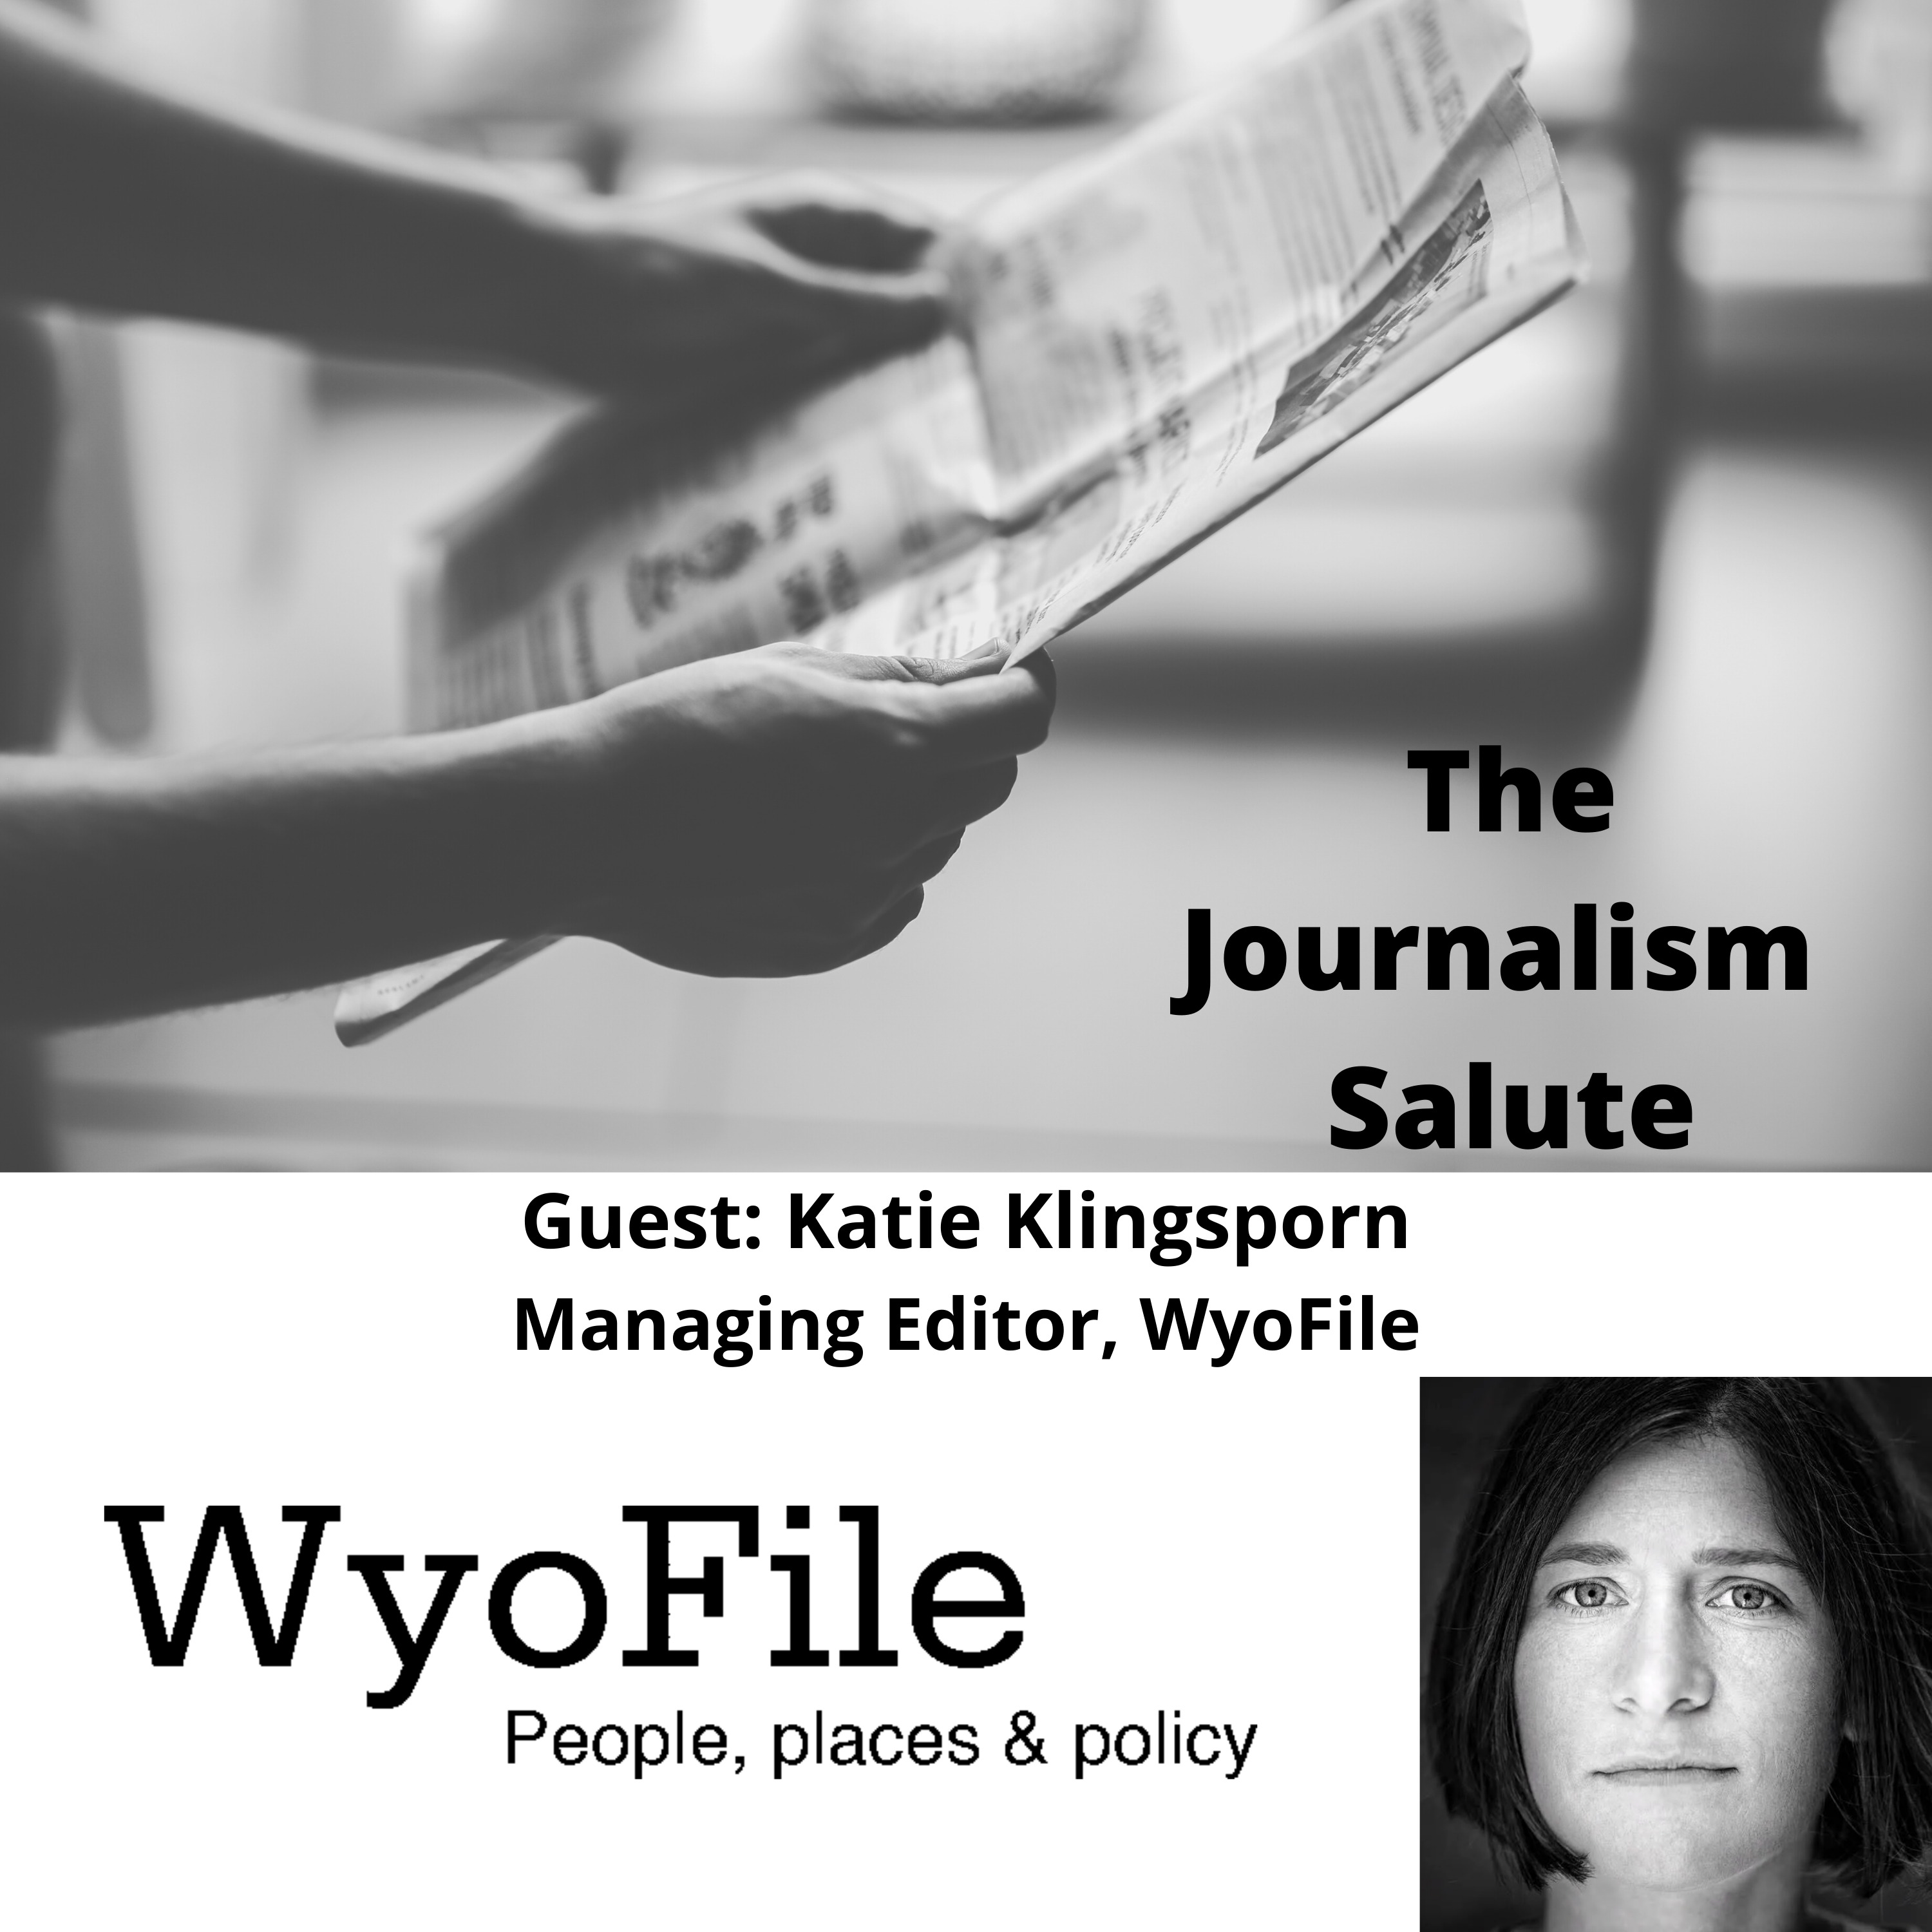 Katie Klingsporn, Managing Editor of WyoFile